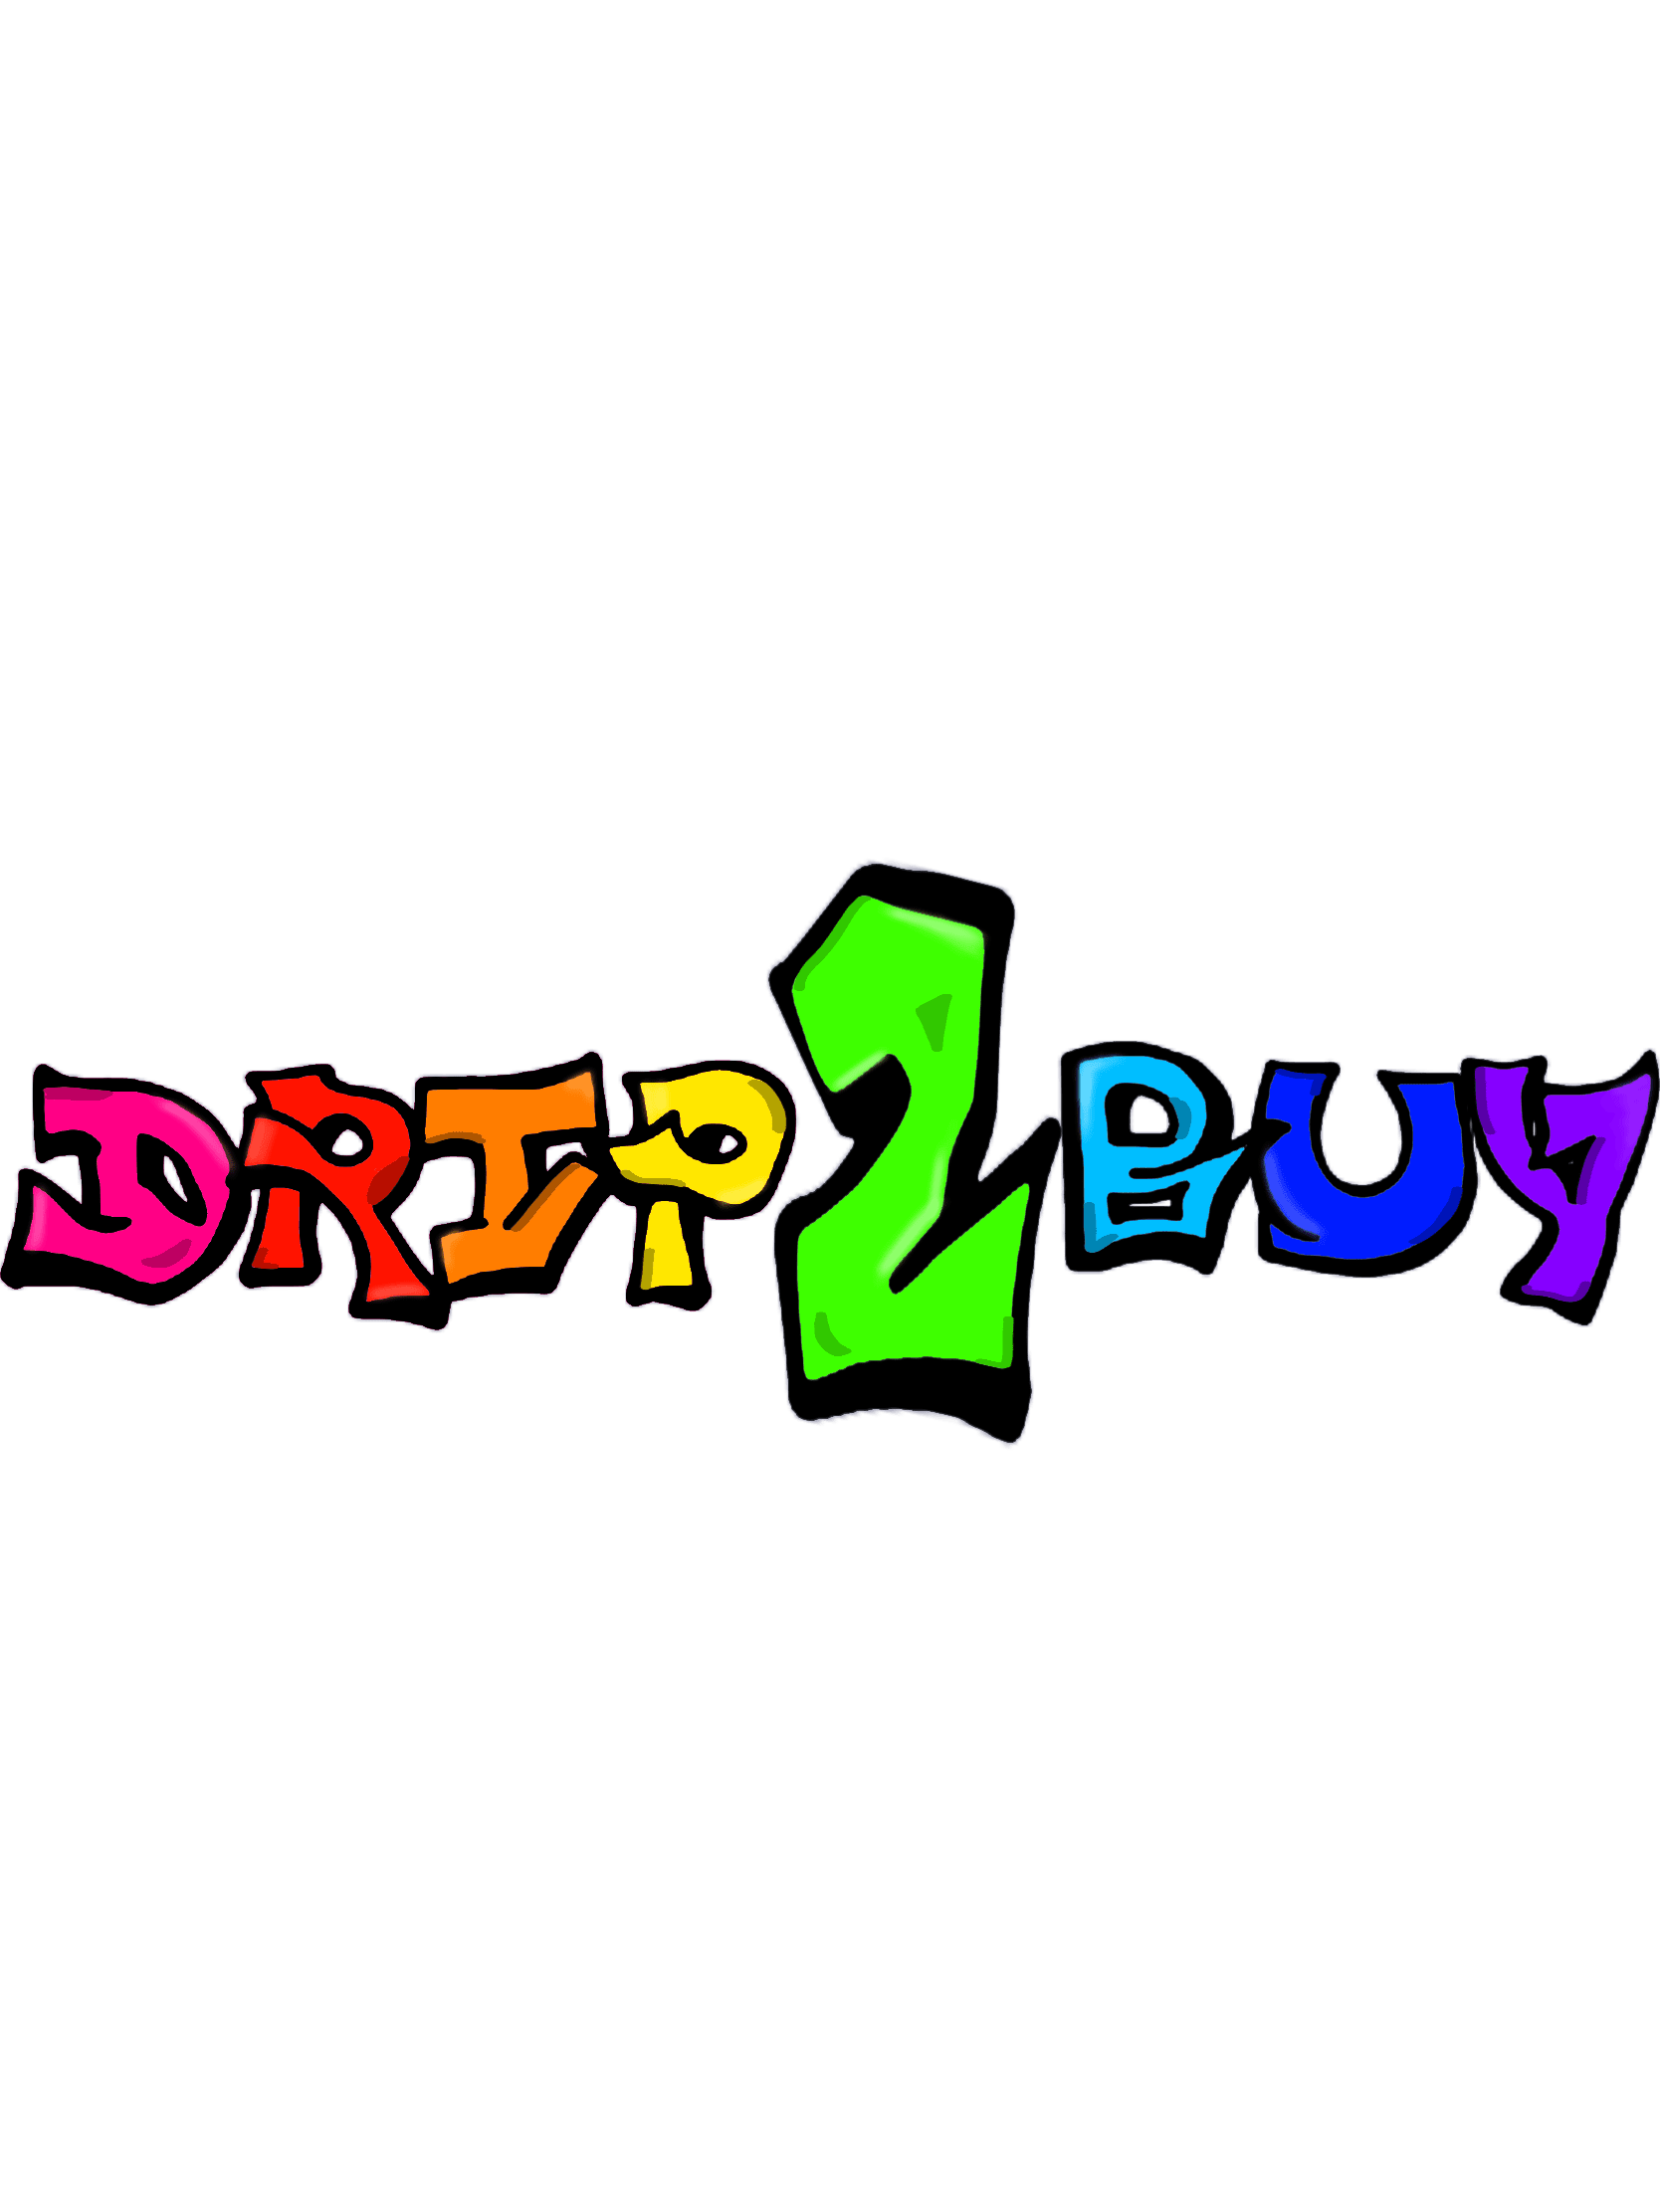 Drip 2 Buy